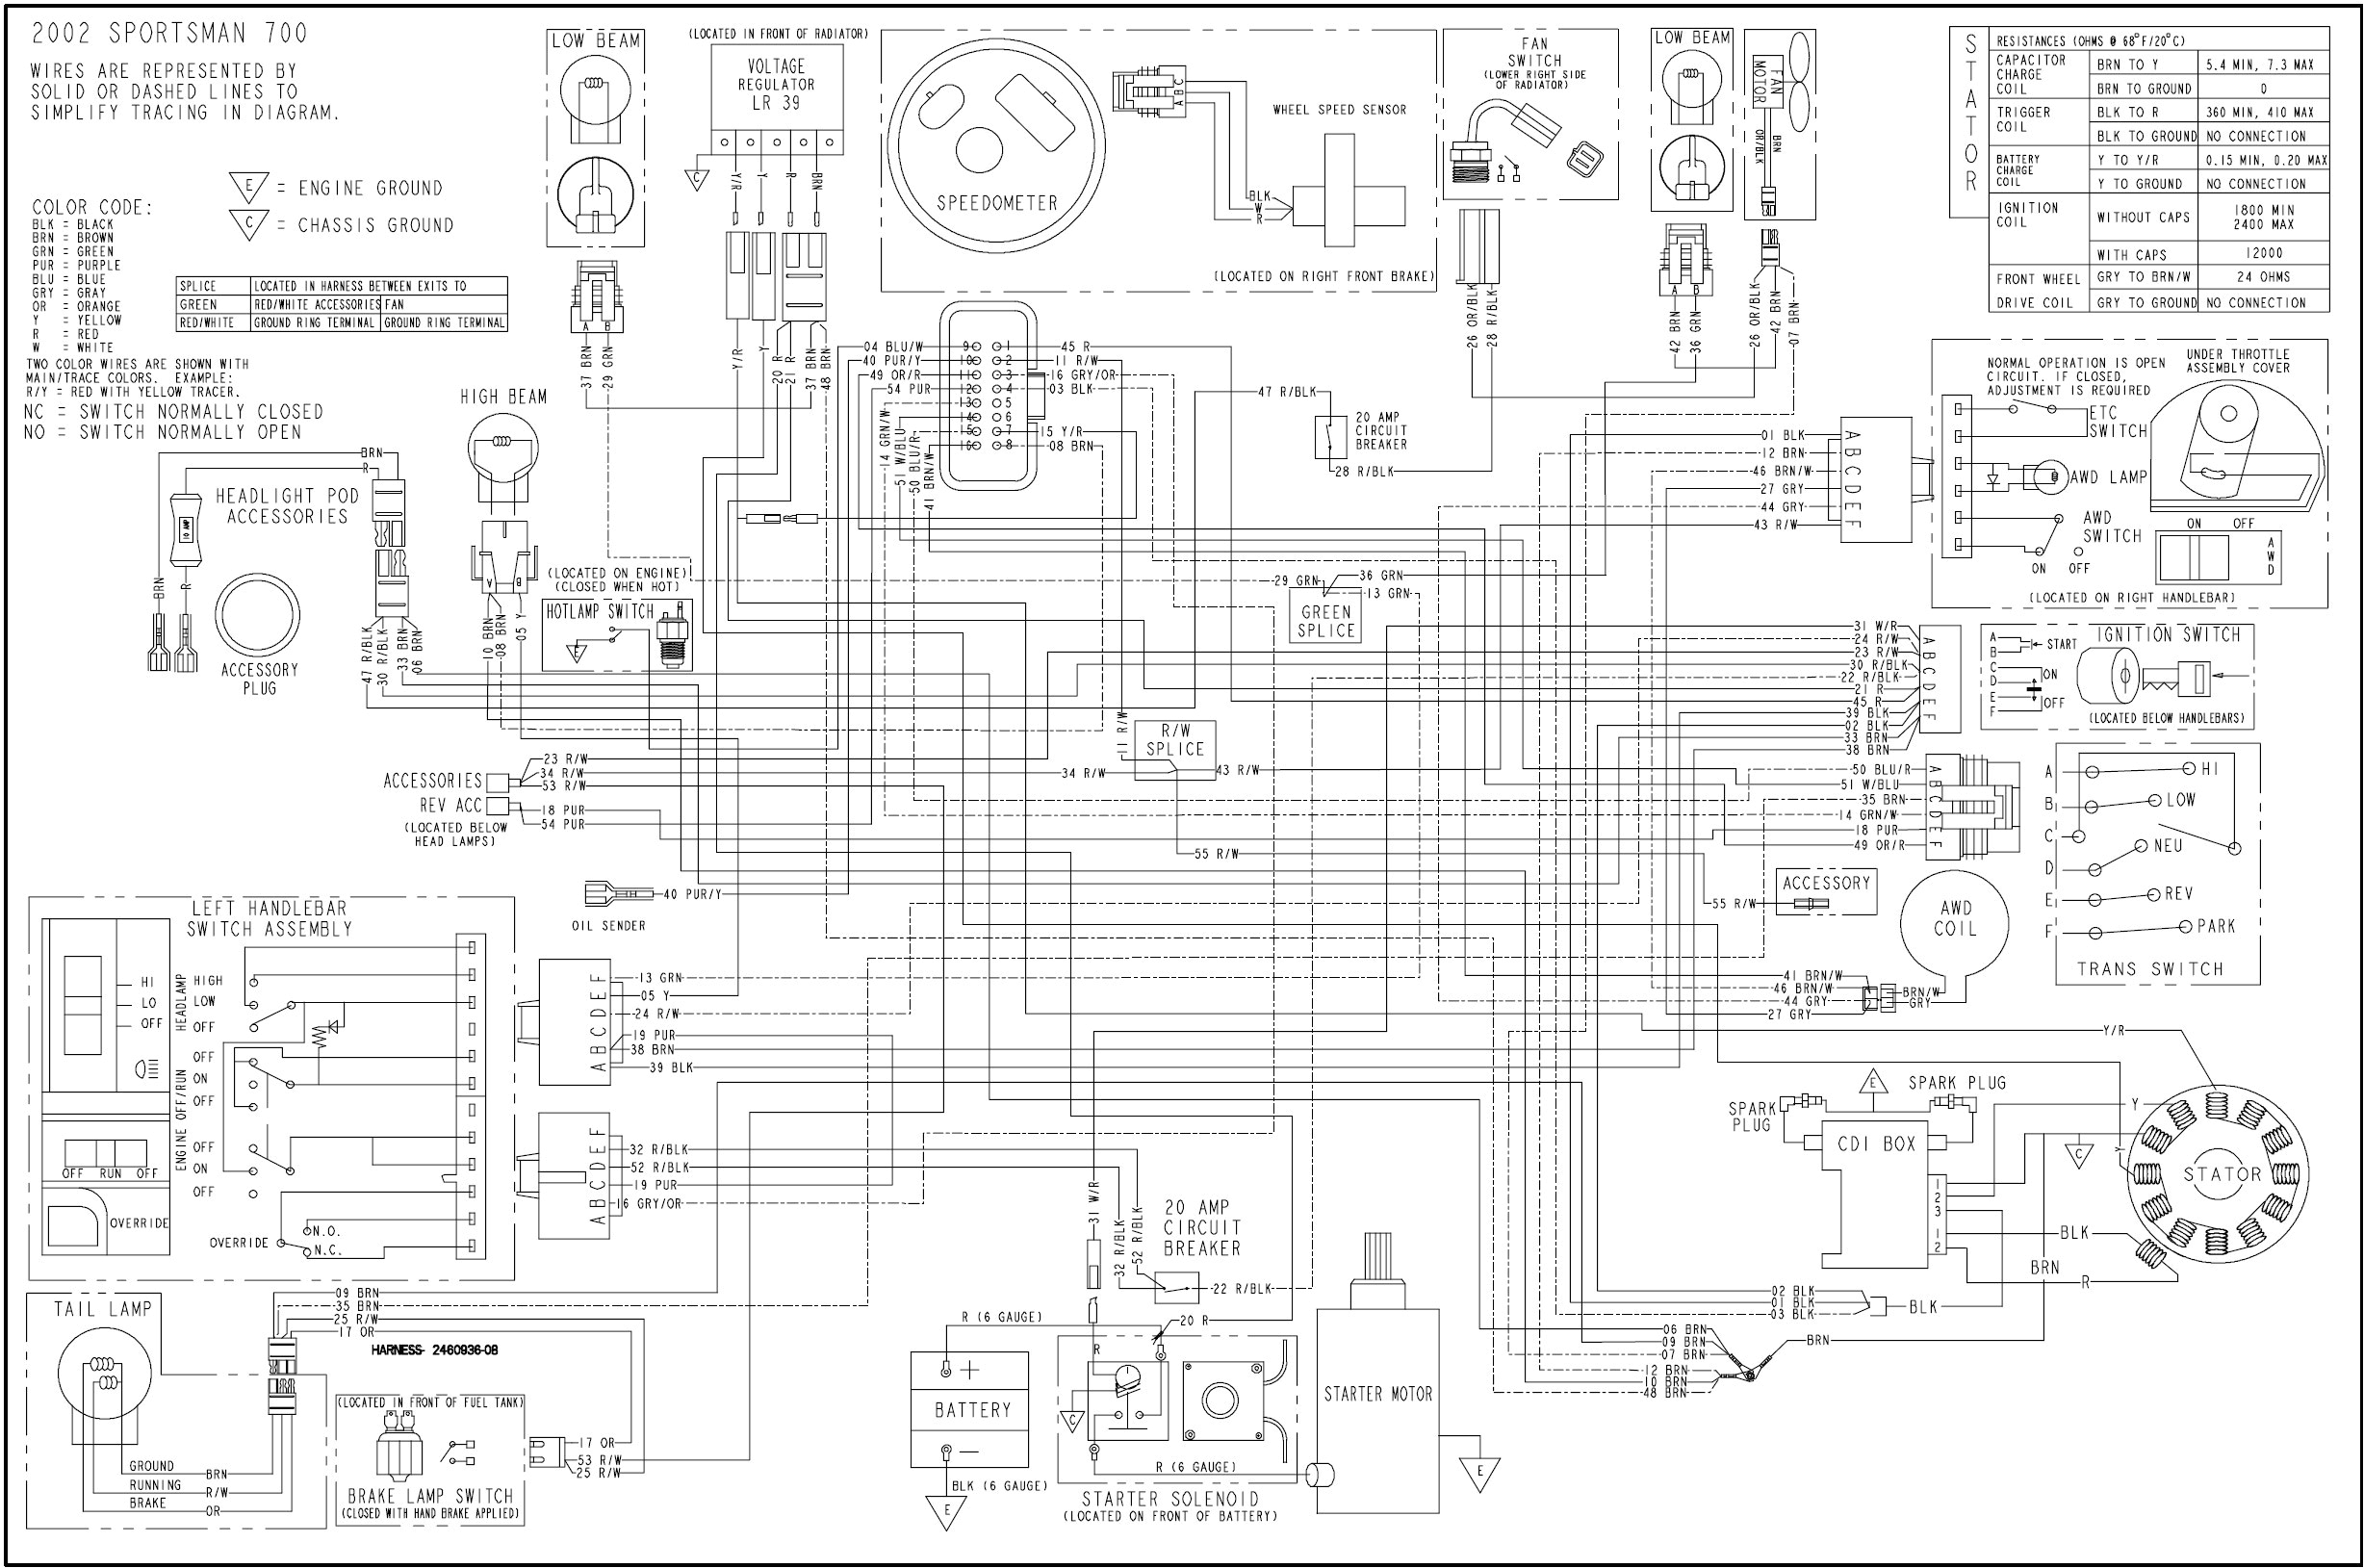 2001 polaris scrambler 500 wiring diagram valid 2002 polaris sportsman 700 parts diagram inspirational stunning of 2001 polaris scrambler 500 wiring diagram jpg